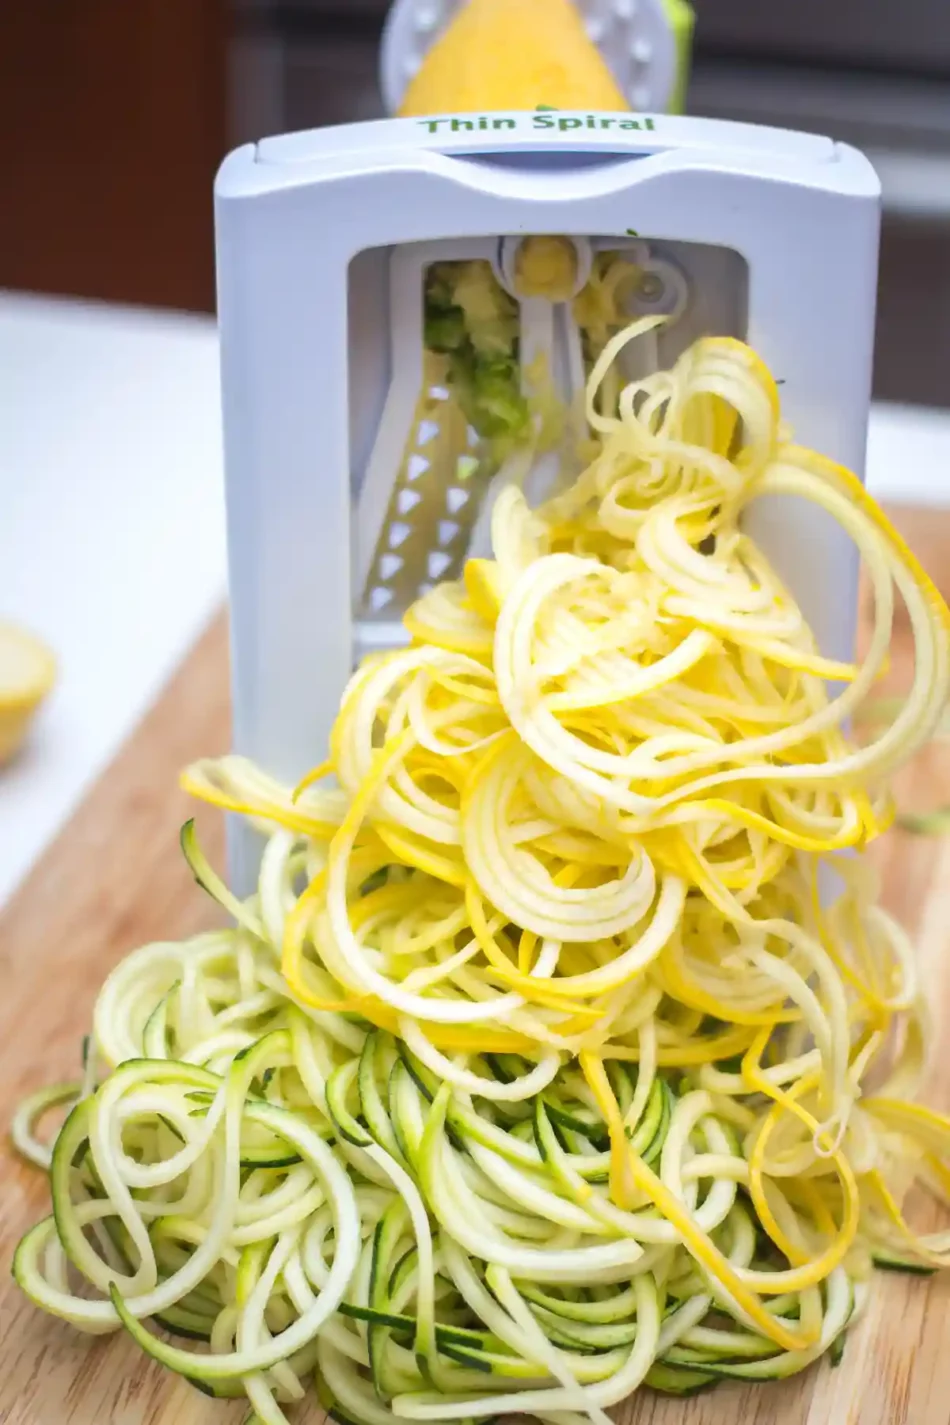 Zucchini & Yellow Squash Noodles with Shrimp and Avocado Pesto (Gluten-Free)